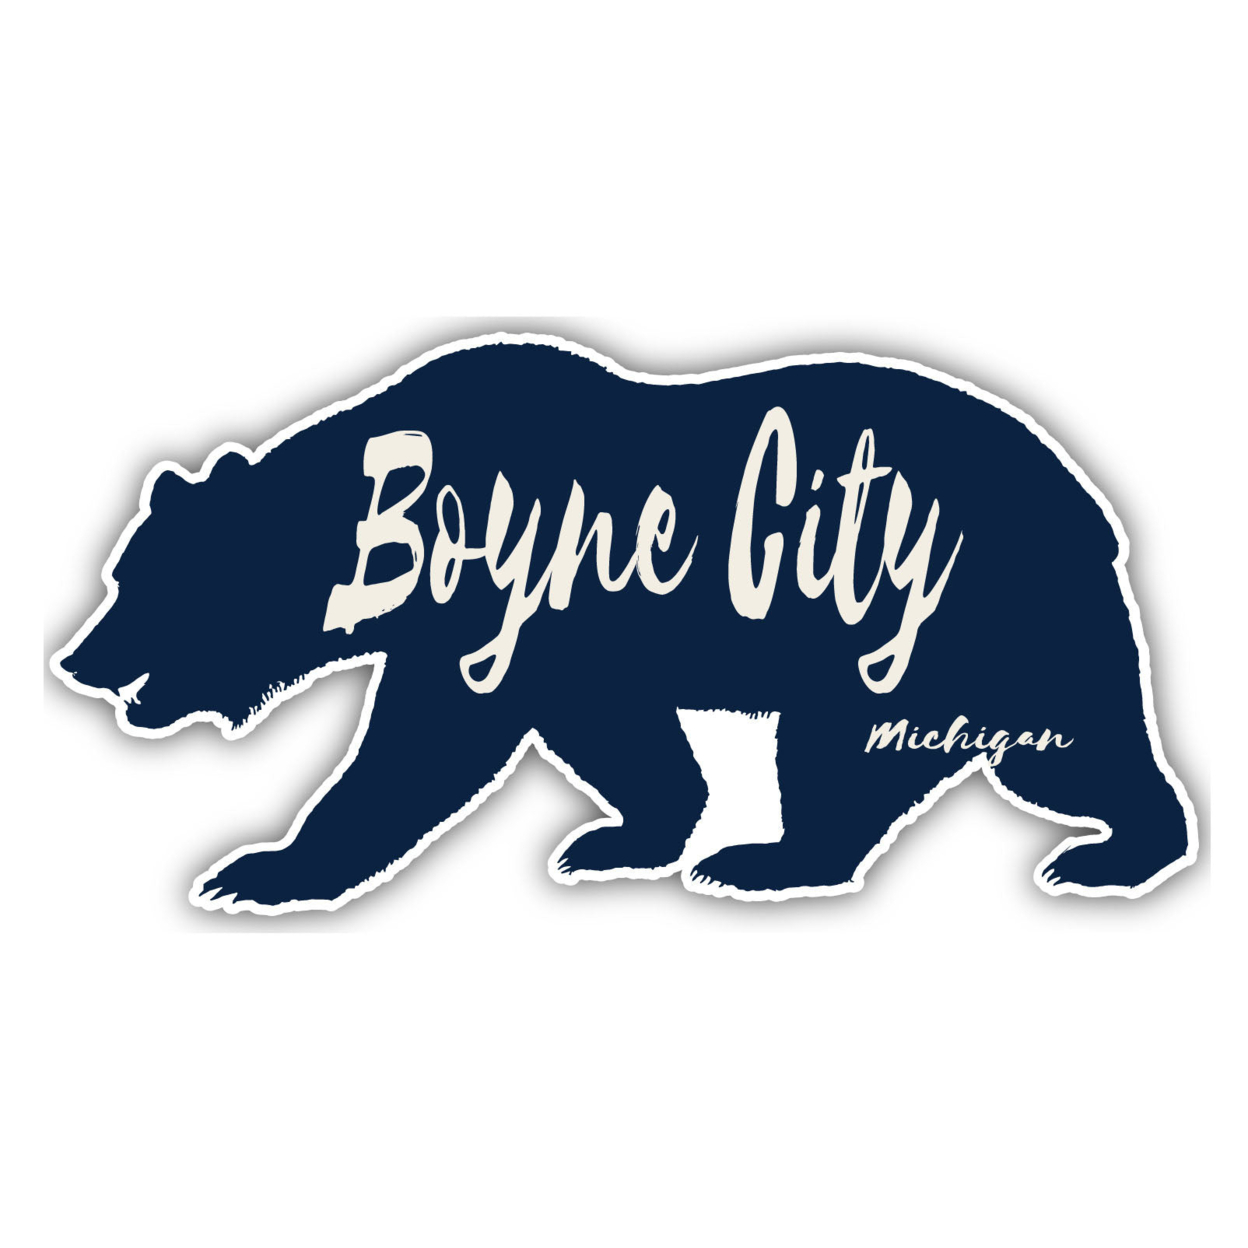 Boyne City Michigan Souvenir Decorative Stickers (Choose Theme And Size) - Single Unit, 6-Inch, Adventures Awaits